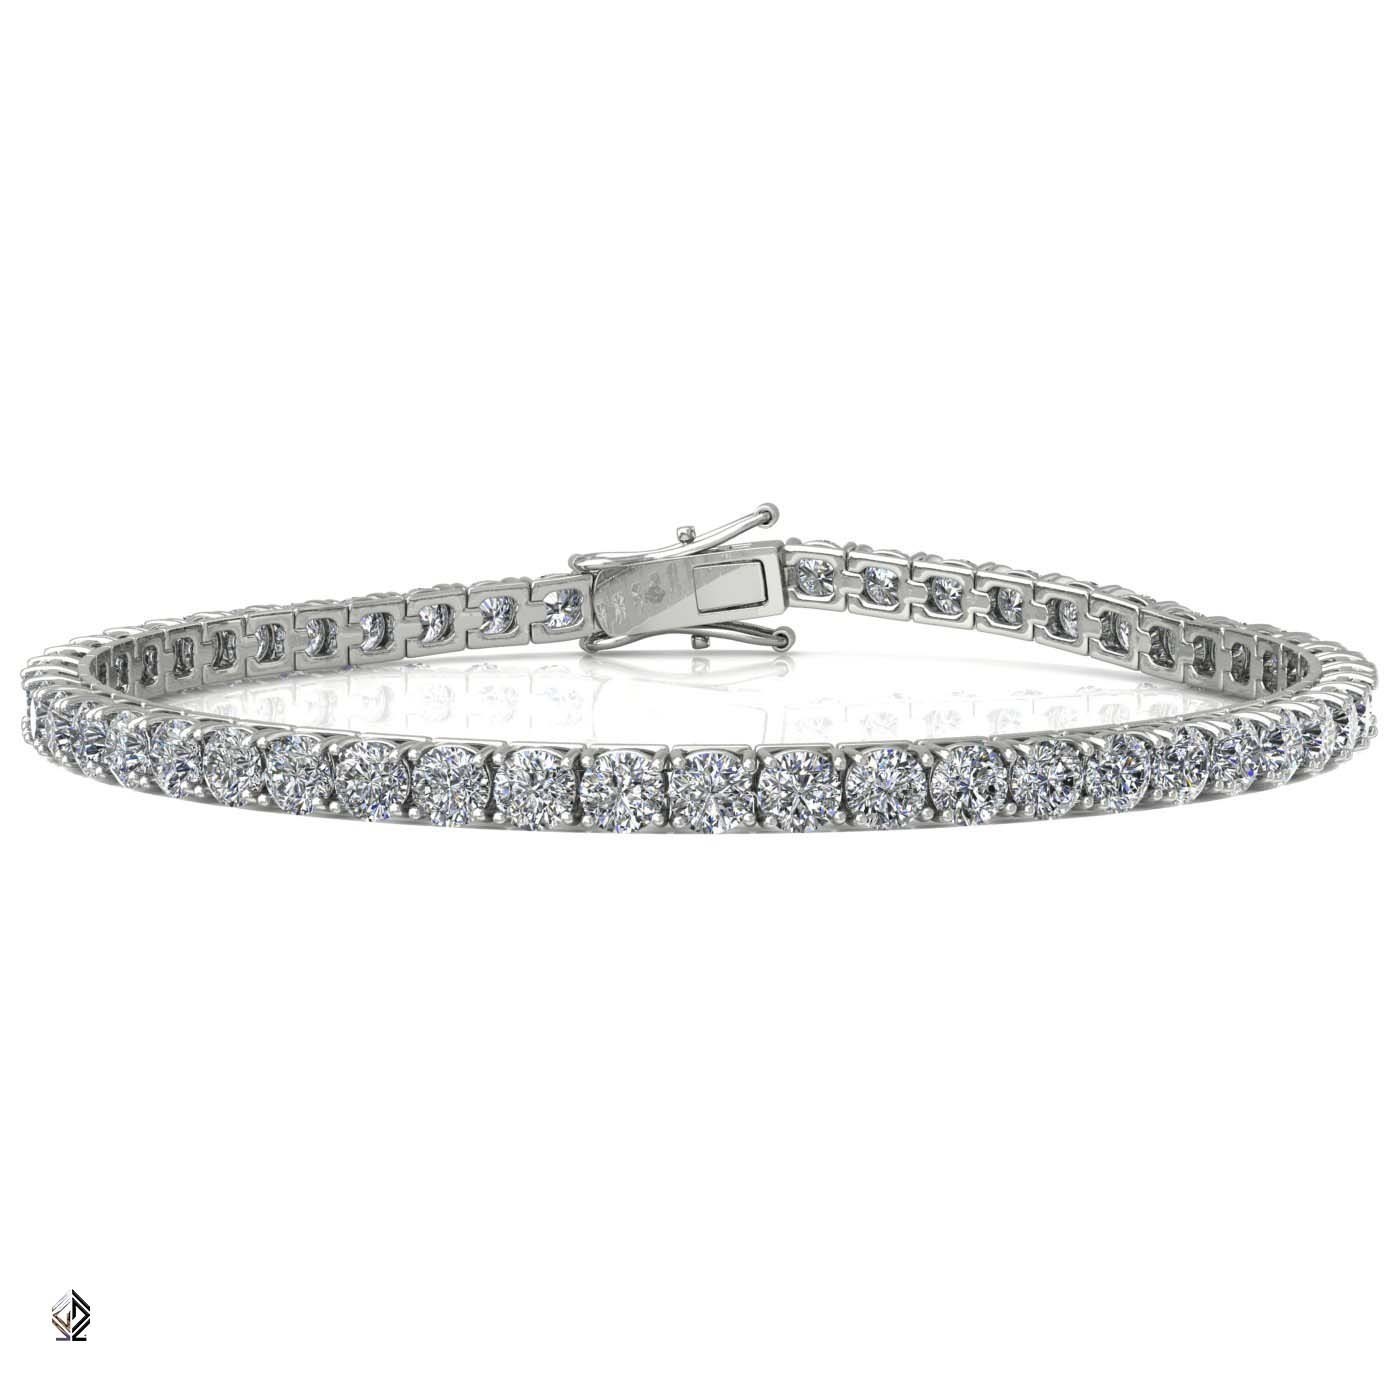 18k white gold 2.6mm 4 prong round shape diamond tennis bracelet in square setting